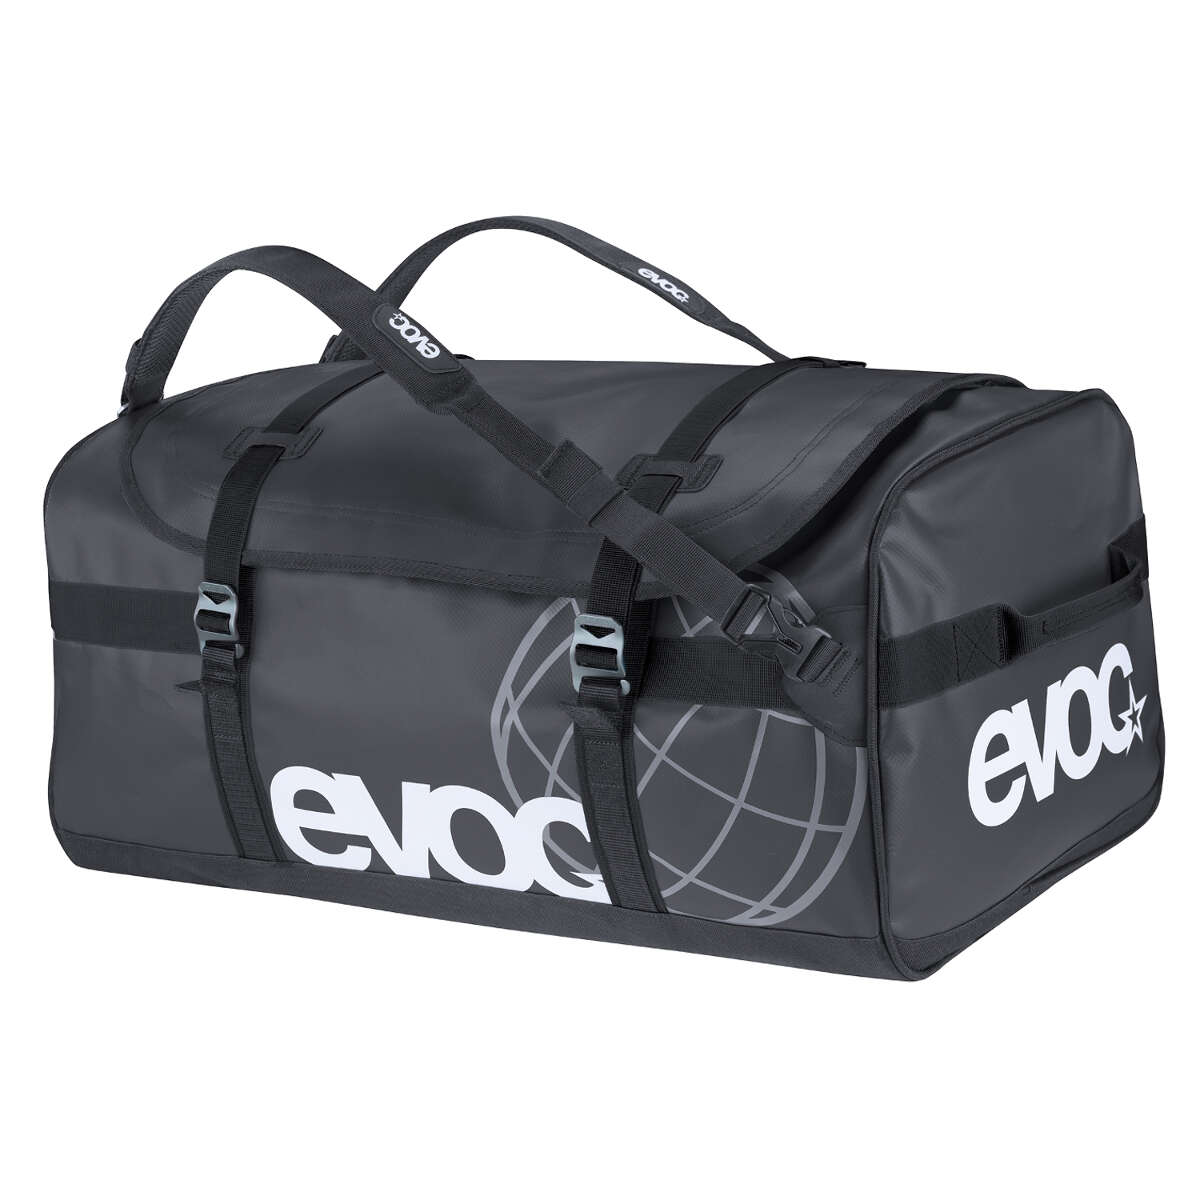 Evoc Travel Bag Duffle Bag Black, 100 Liter